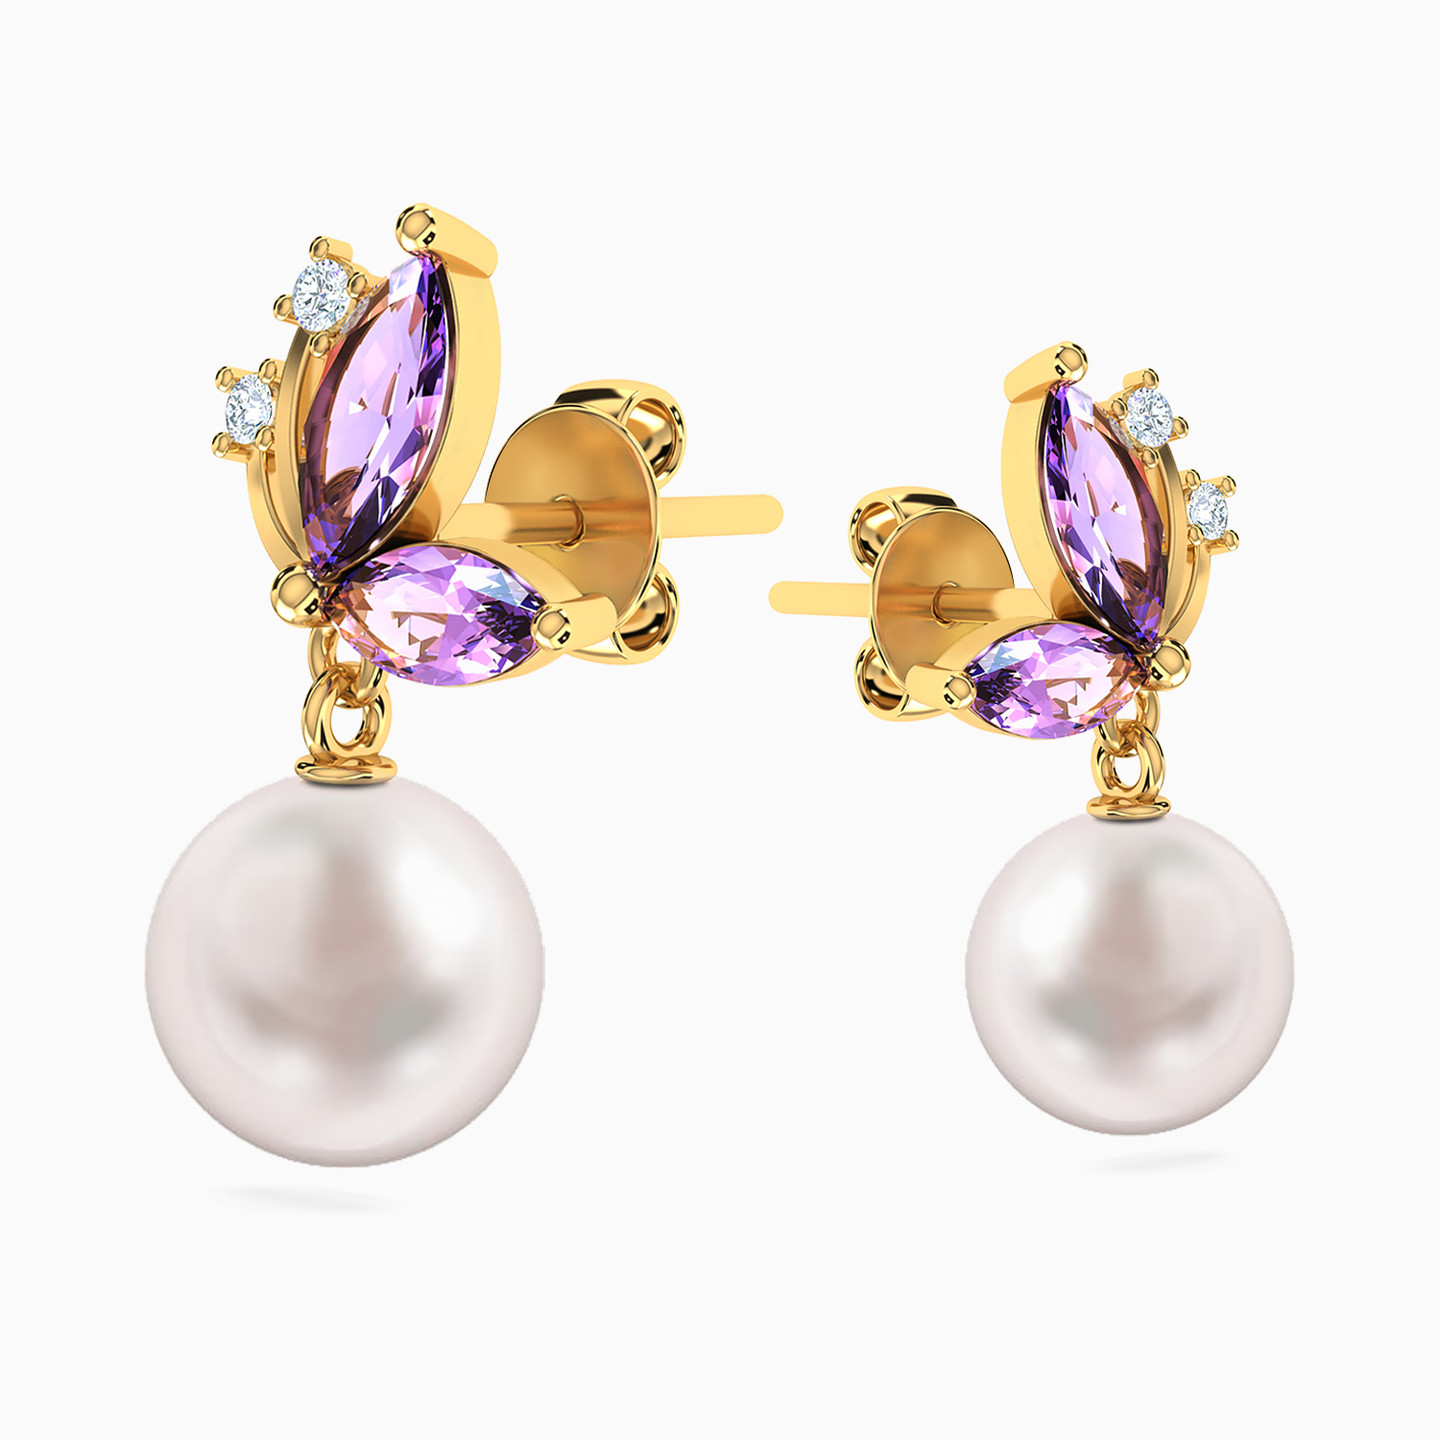 18K Gold Pearls & Colored Stones Drop Earrings - 3